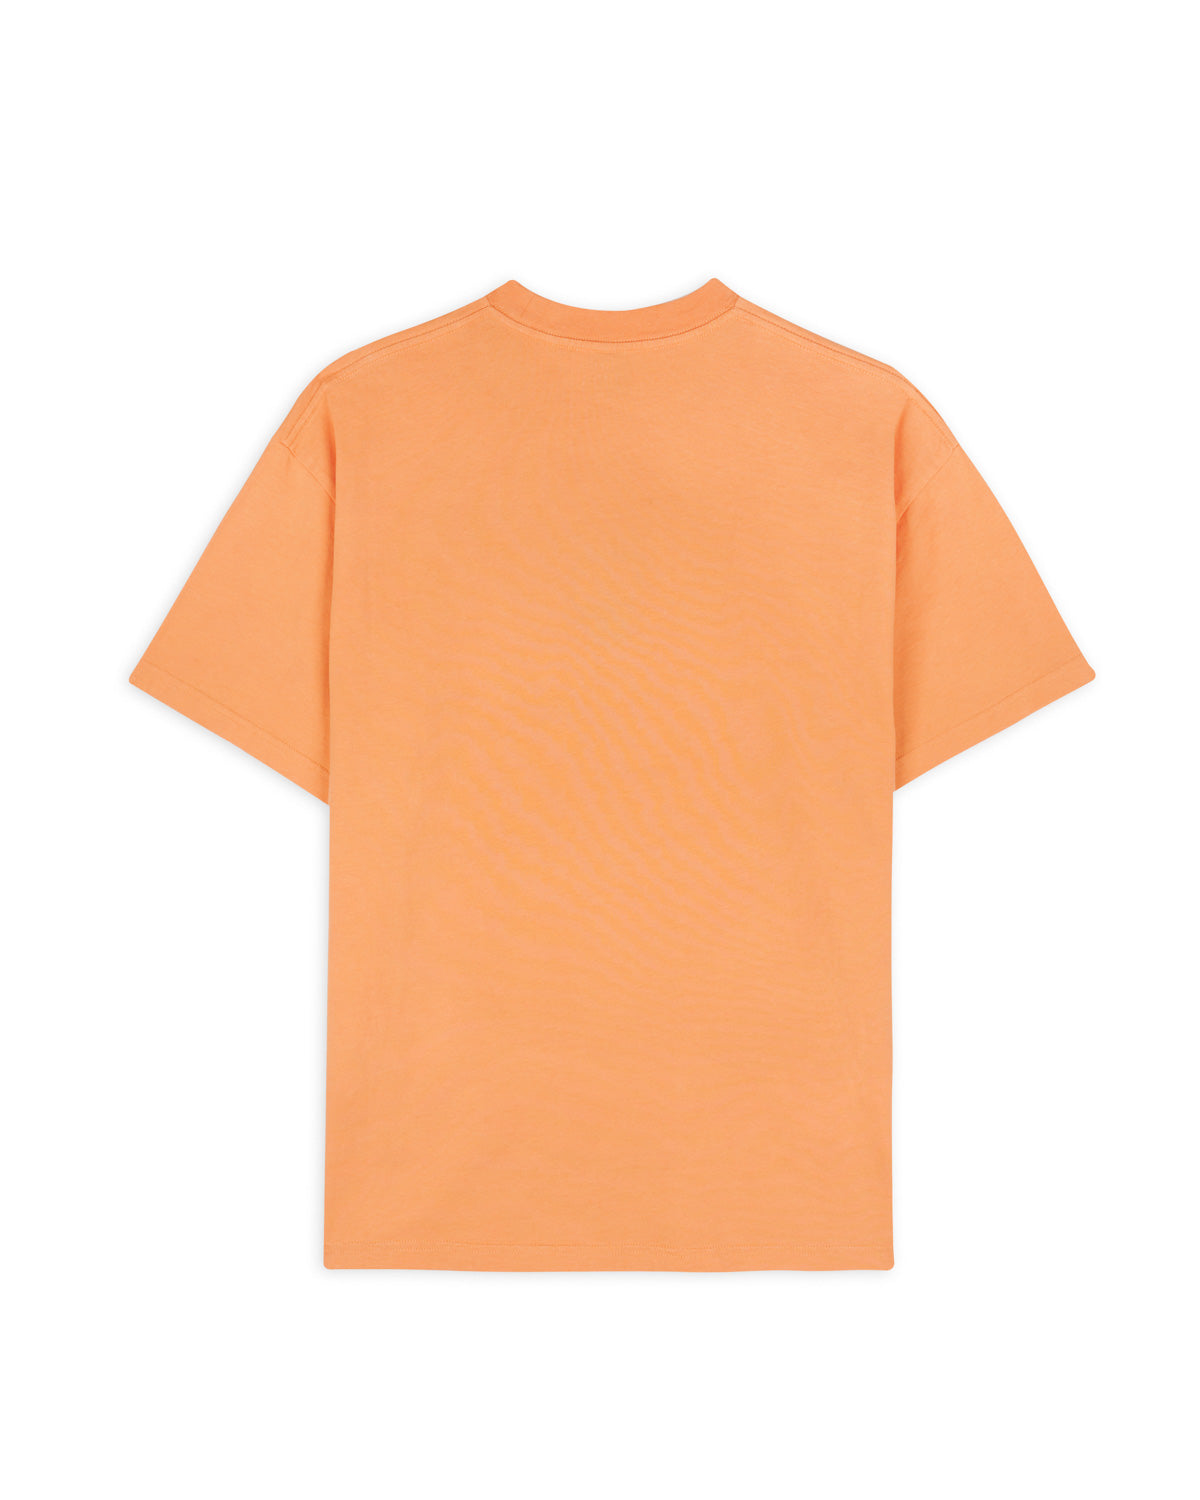 Low Battery T-Shirt- Peach 2